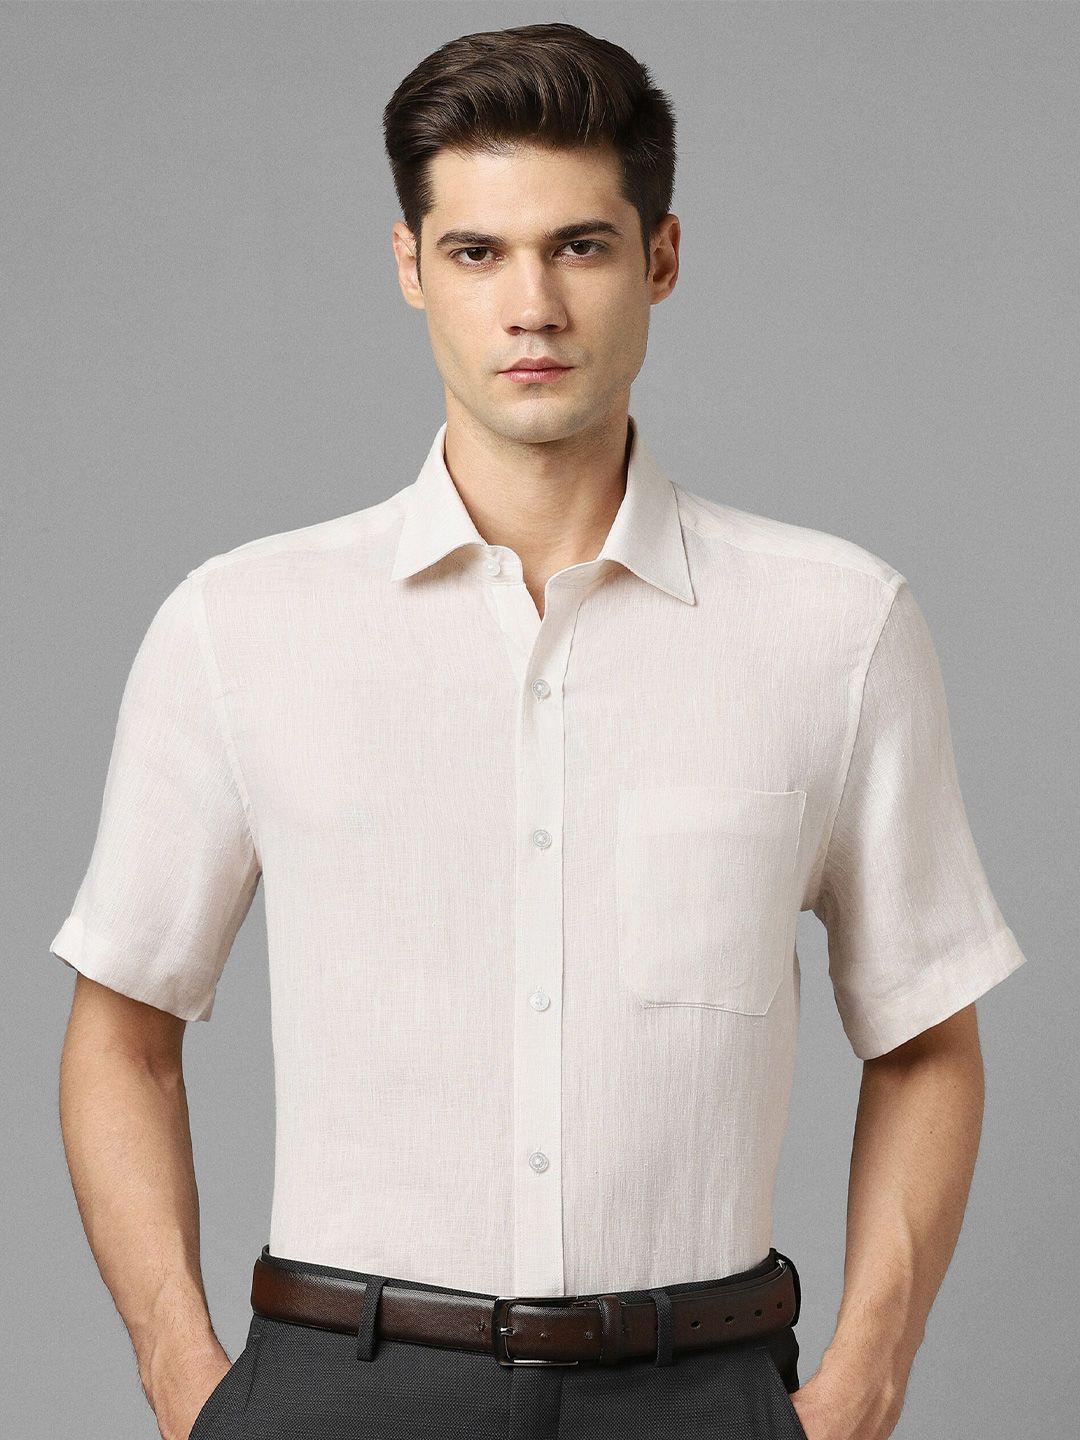 louis philippe slim fit linen formal shirt